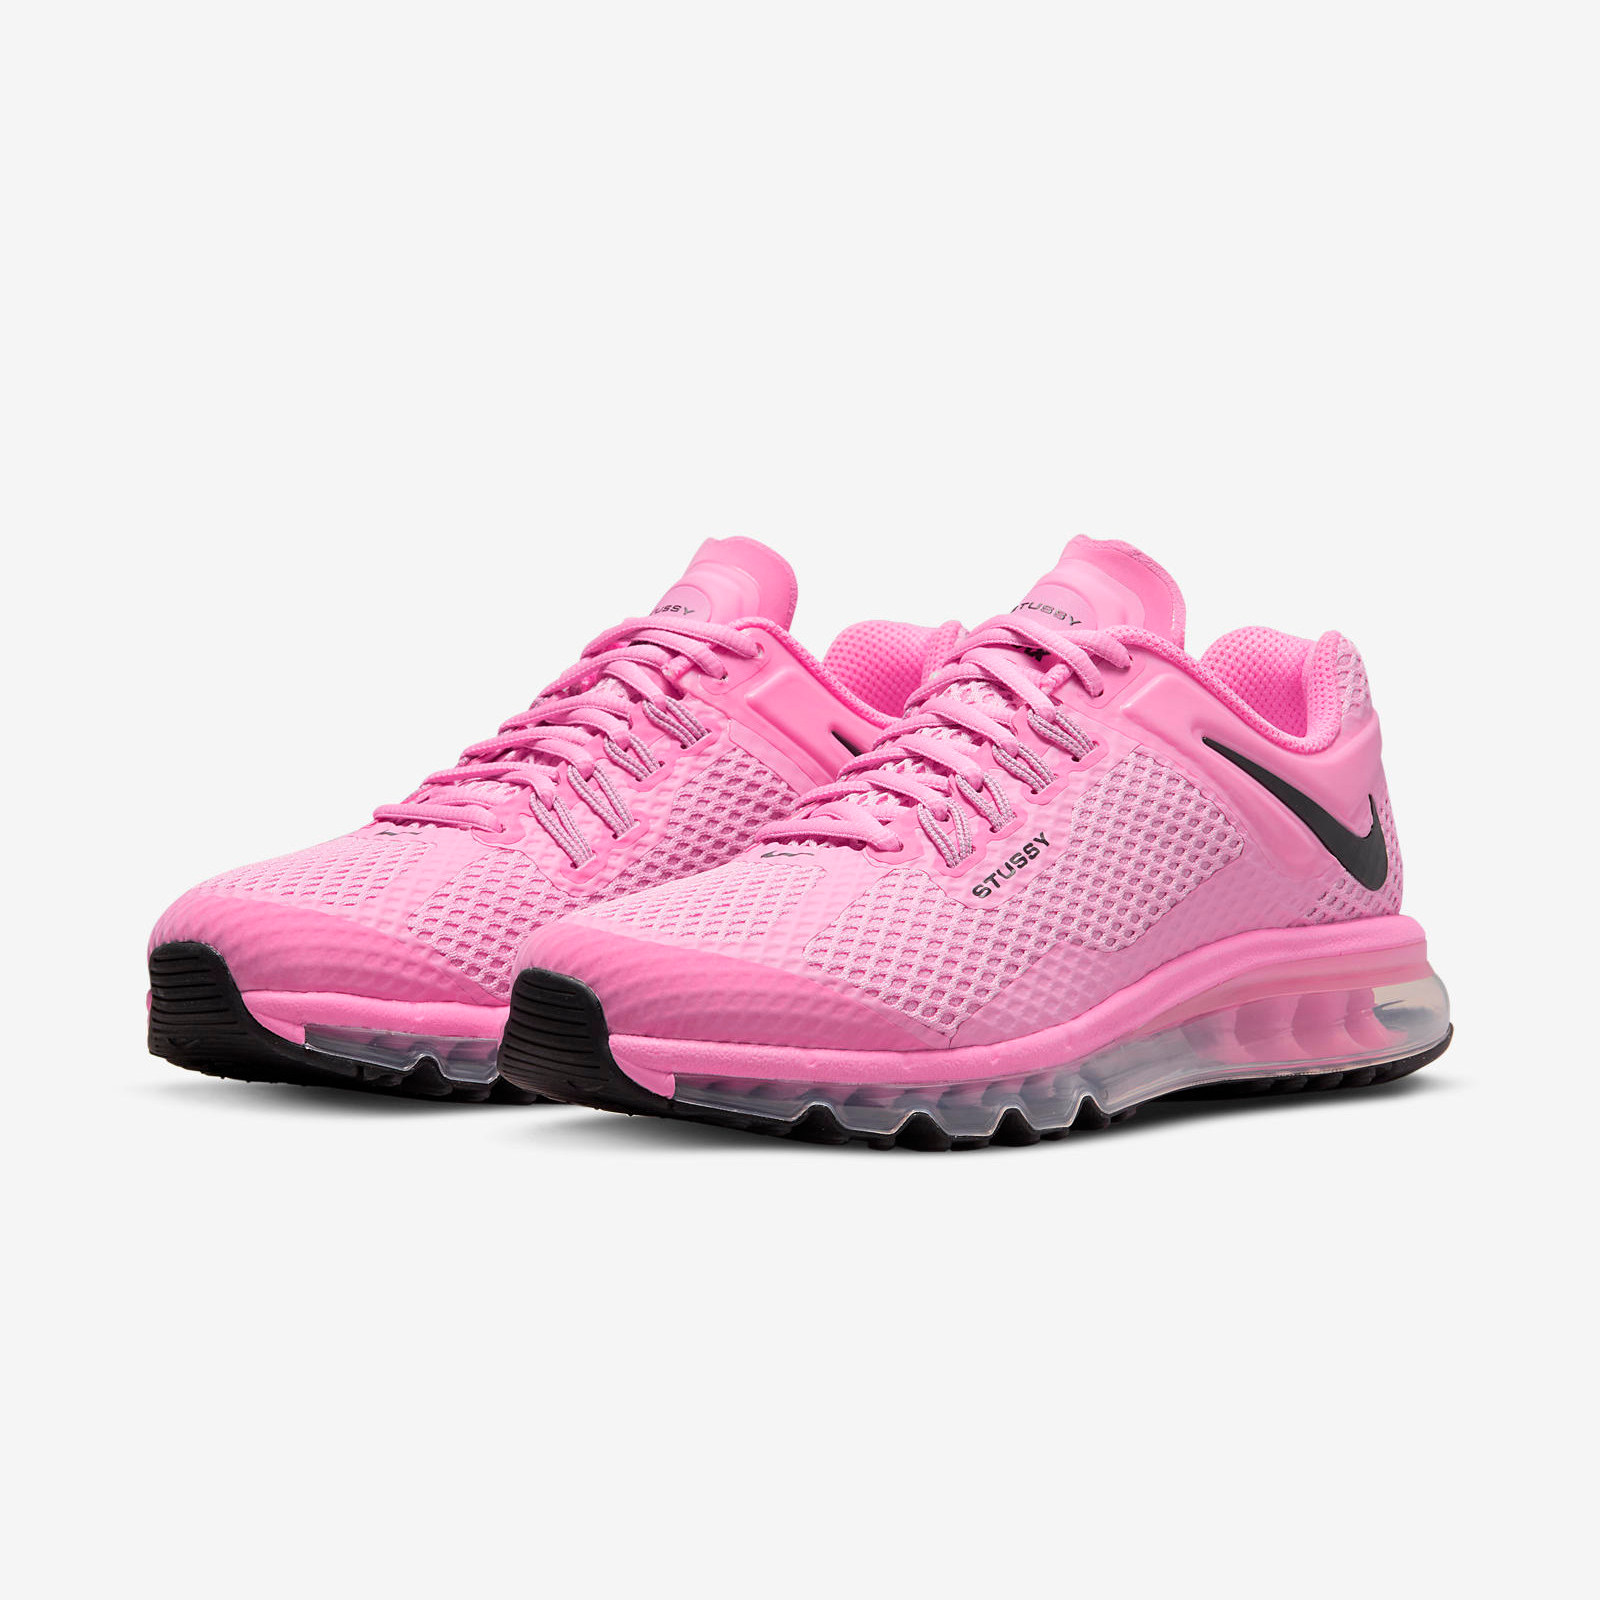 Stussy x Nike
Air Max 2013
« Psychic Pink »